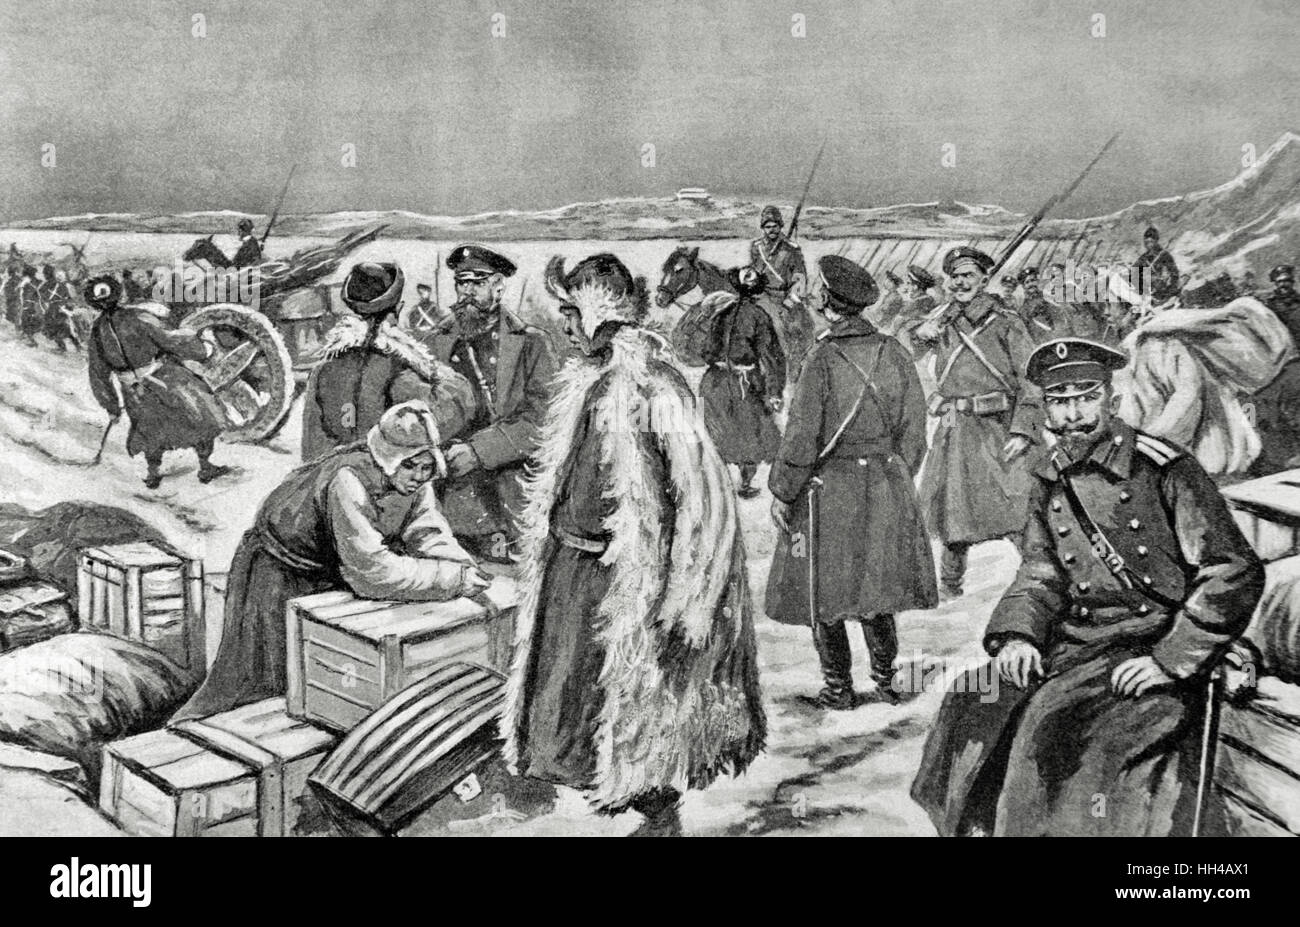 Russo-japanischer Krieg (1904-1905). Russische Armee am Ufer des Flusses Yalu, Gebiet von Korea. Gravur. "La Ilustracion Espanola y Americana", 1904. Stockfoto